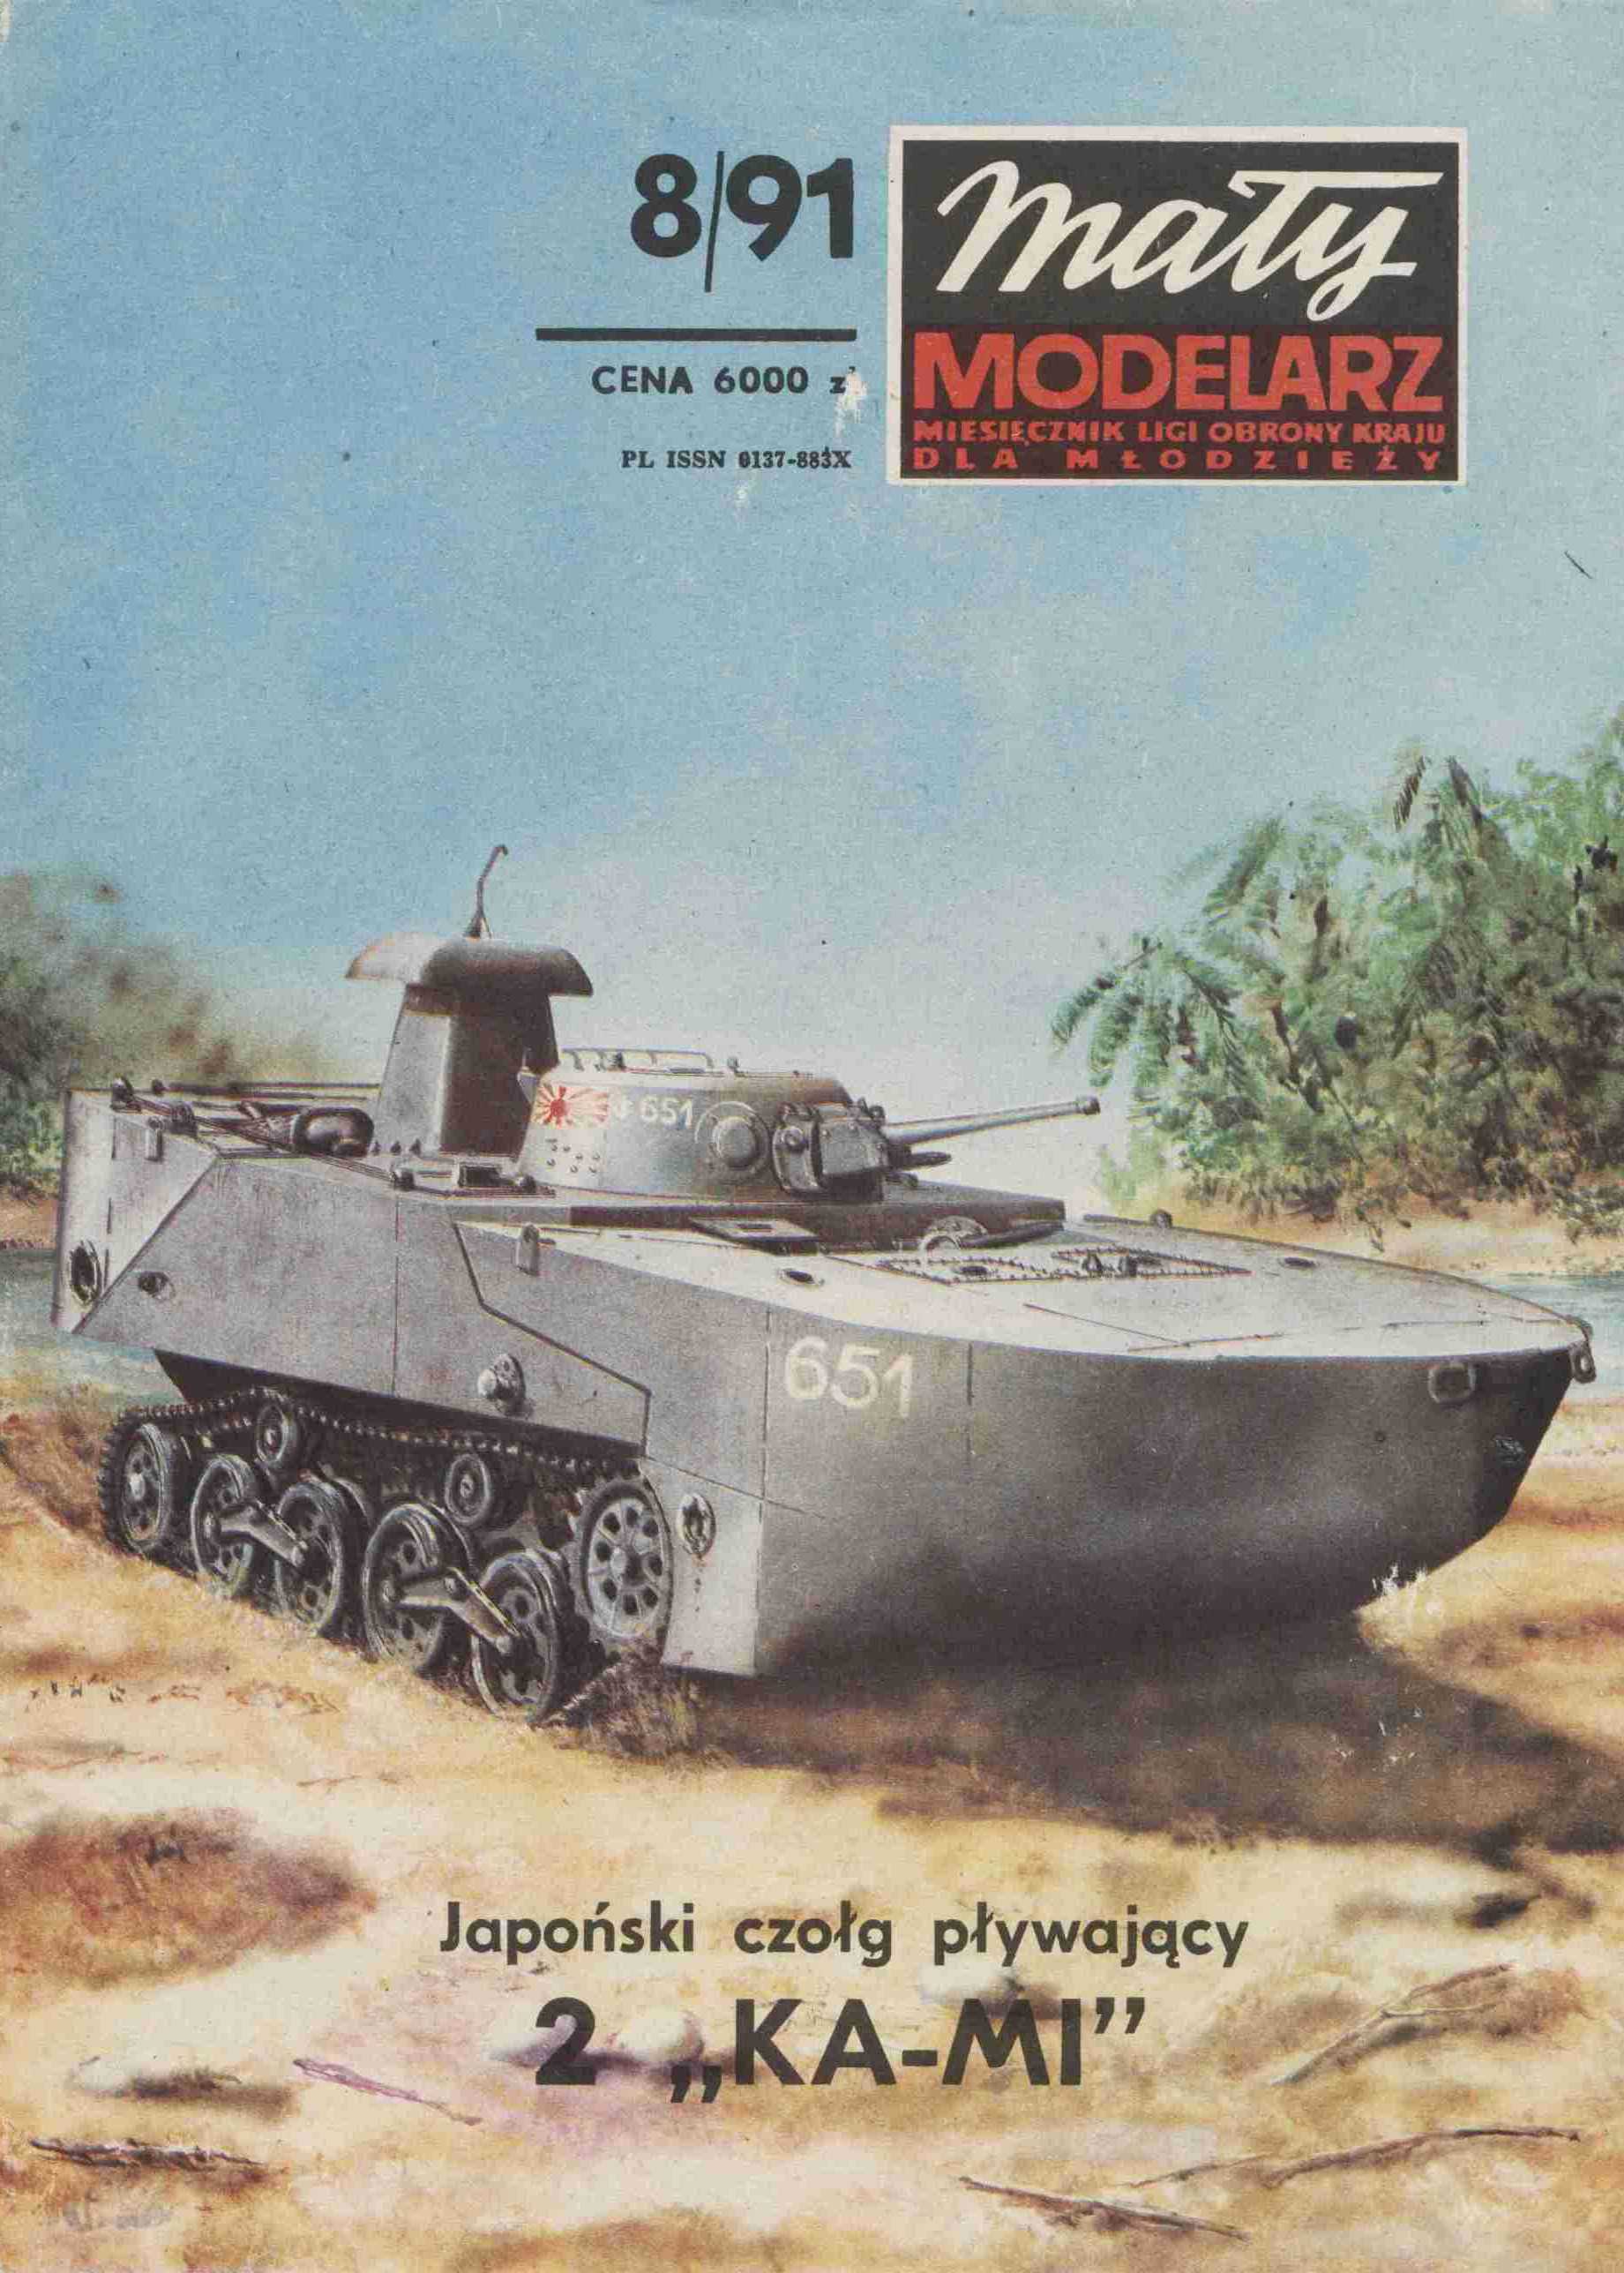 "Maly Modelarz" 8, 1991